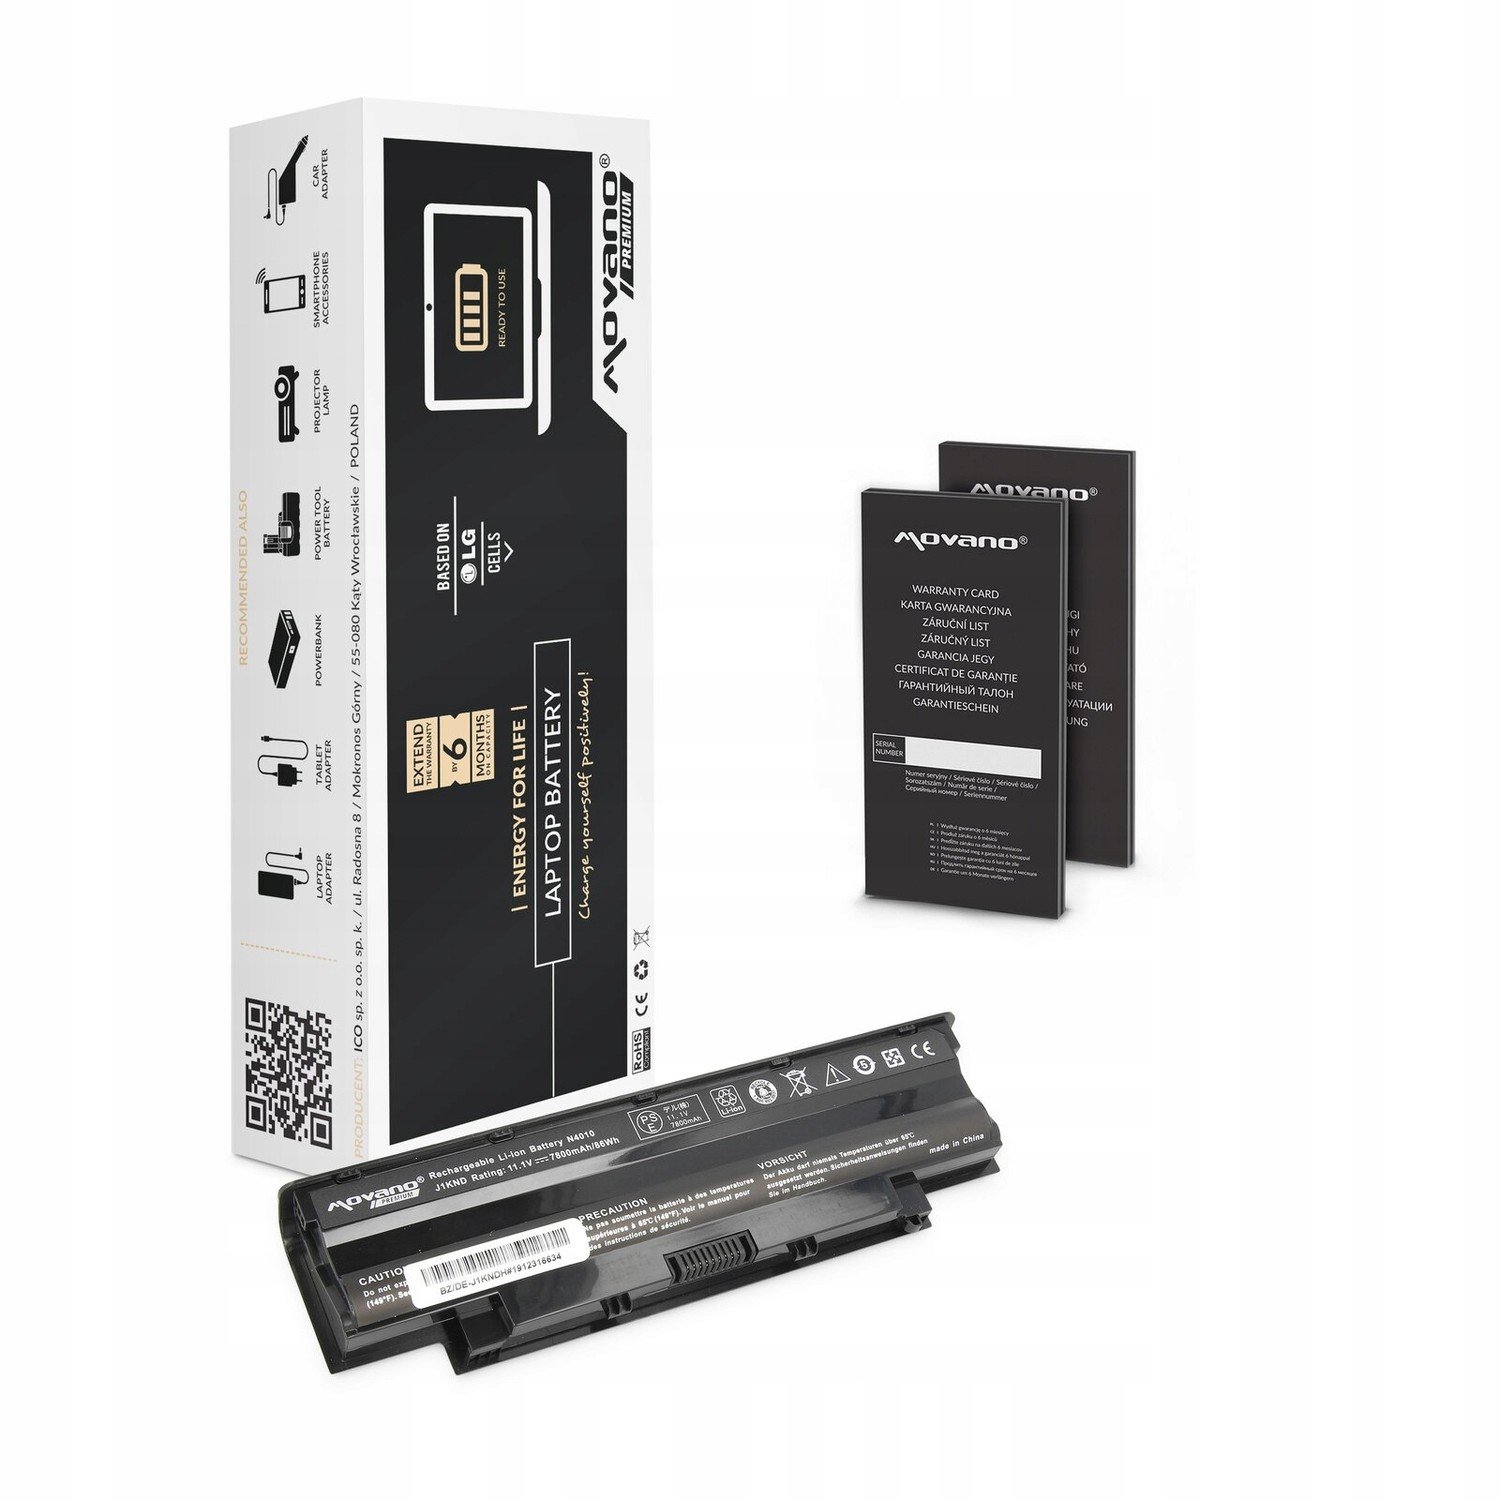 Baterie pro Dell Inspiron N5020 N5030 N5030D N5030R